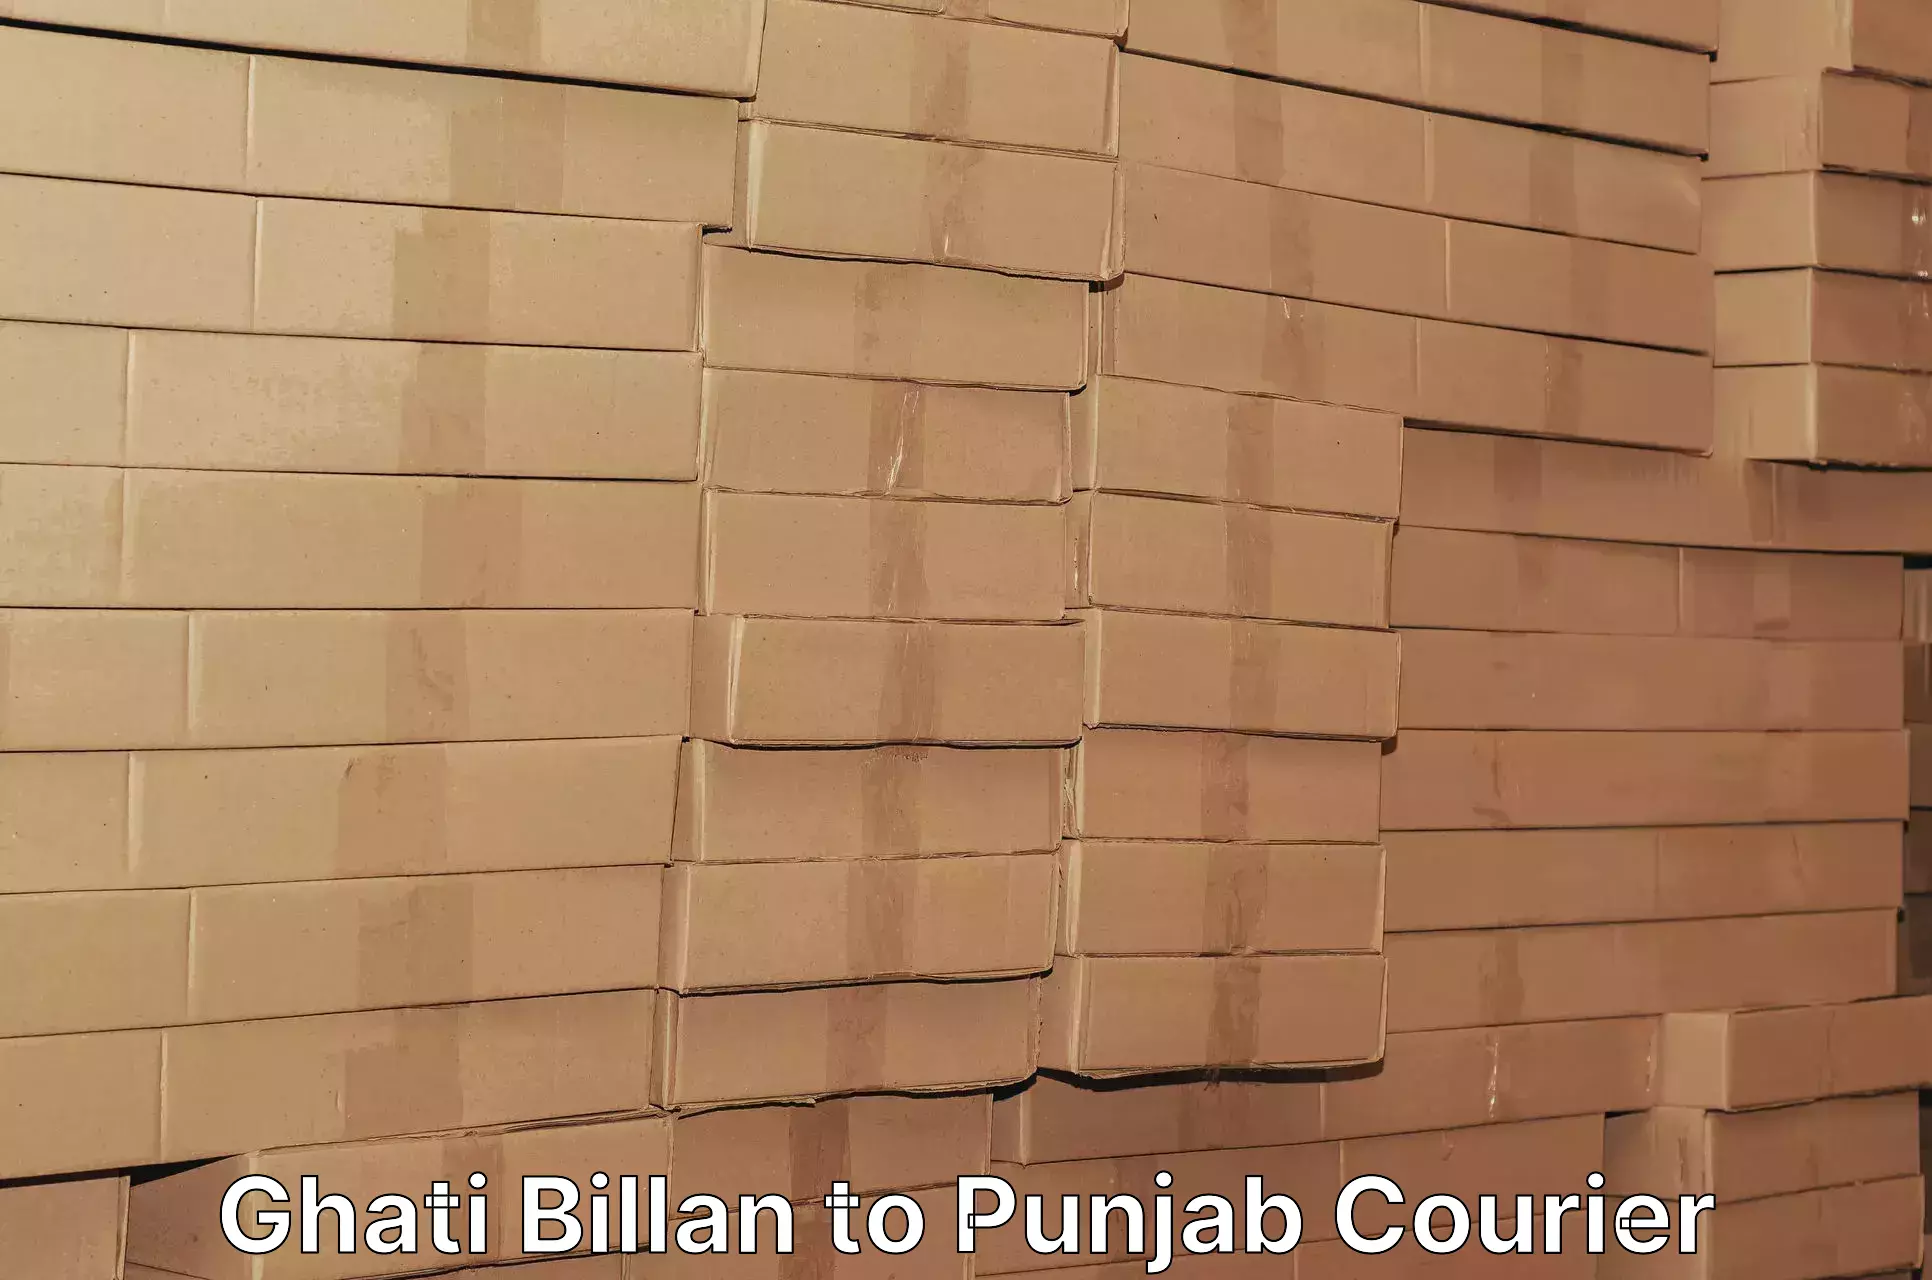 Urgent courier needs Ghati Billan to Batala